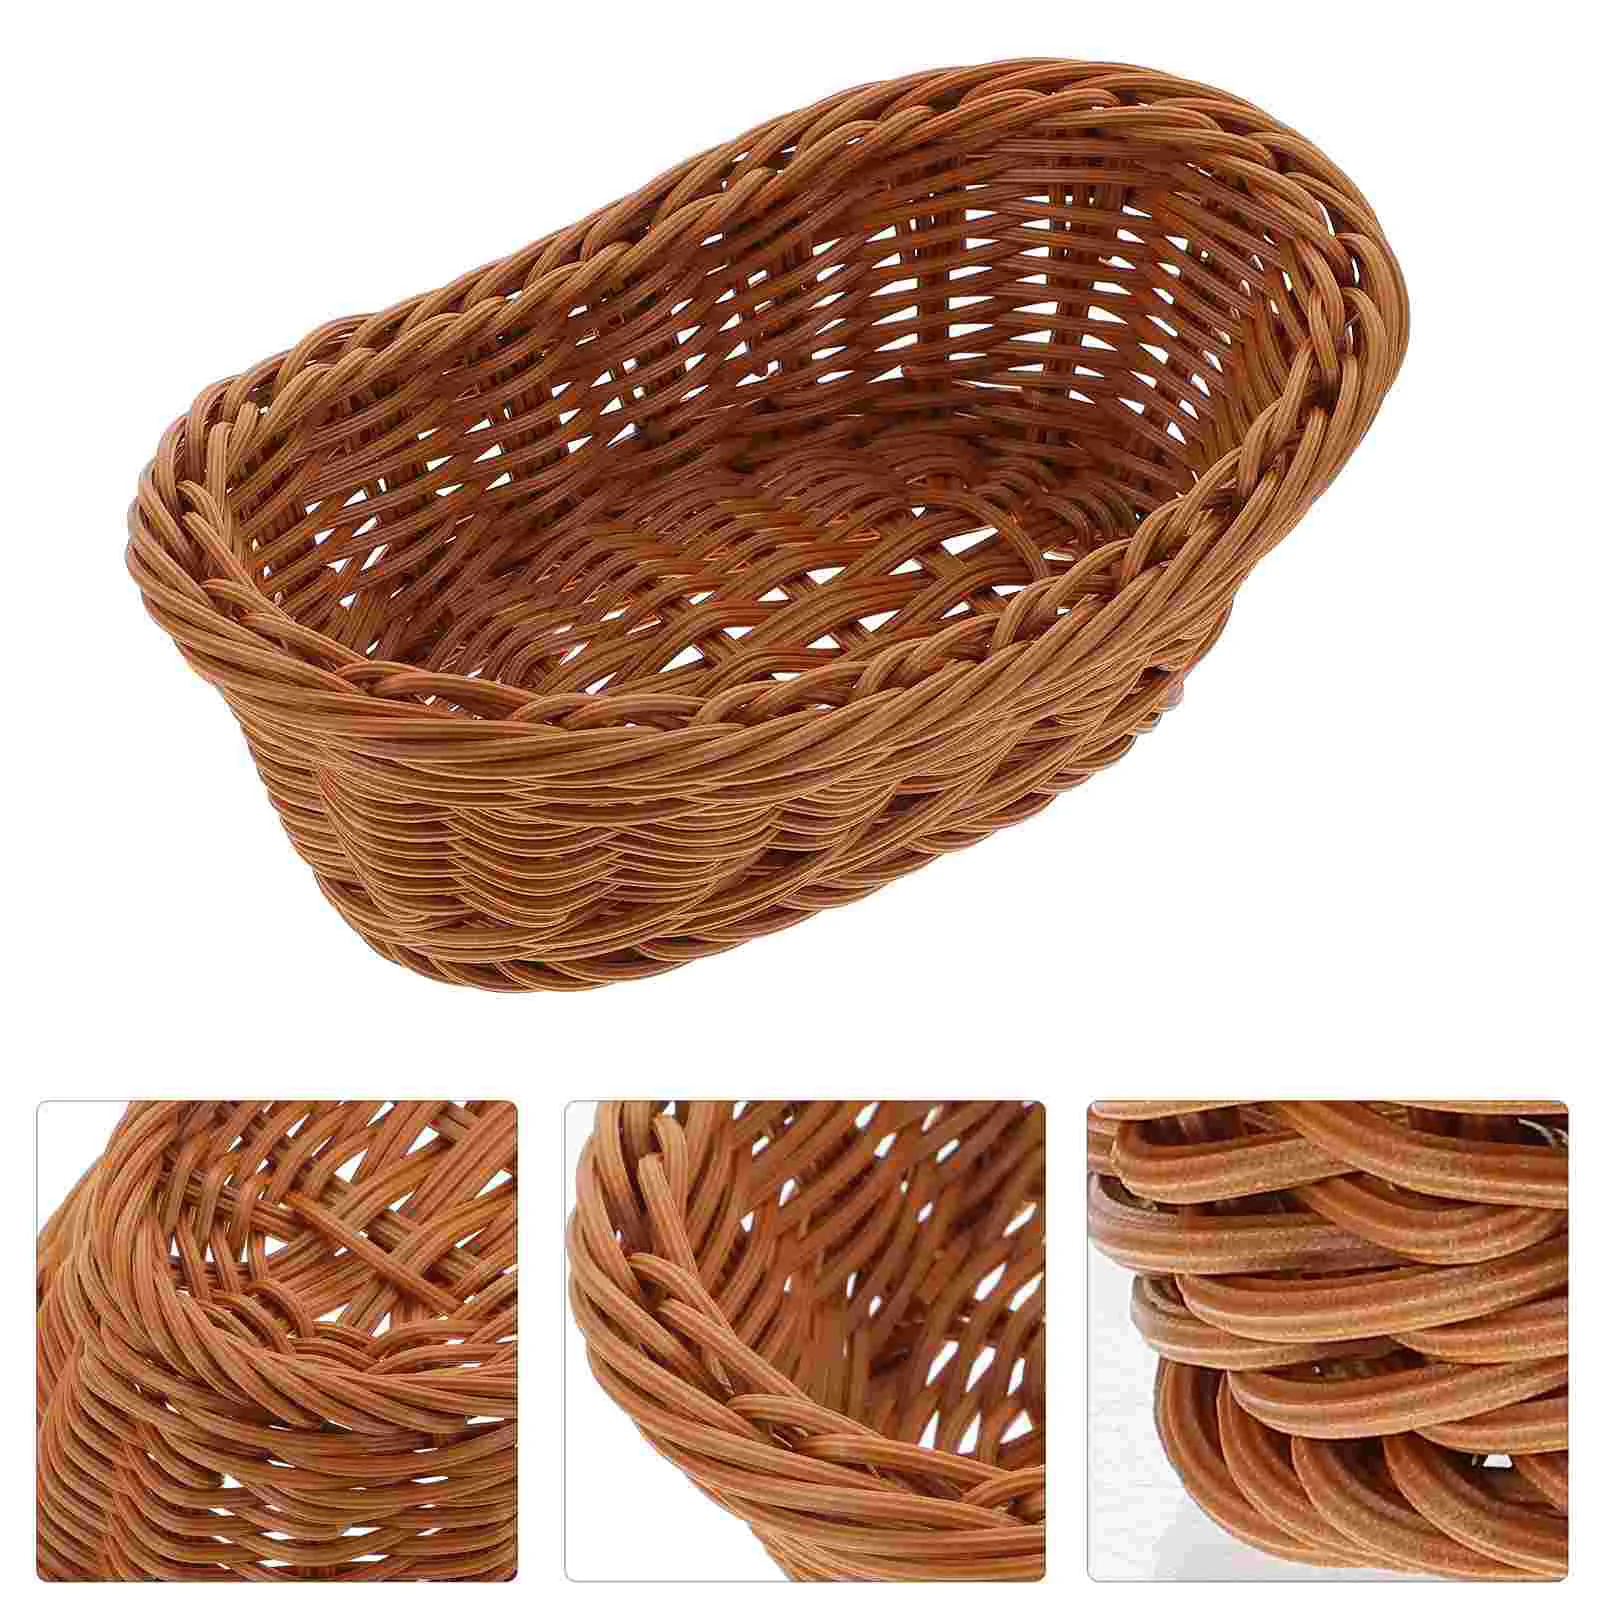 

Basket Bread Wicker Baskets Serving Fruit Woven Rattan Food Tray Storage Bowl Oval Vegetable Handwoven Snack Plate Ratten